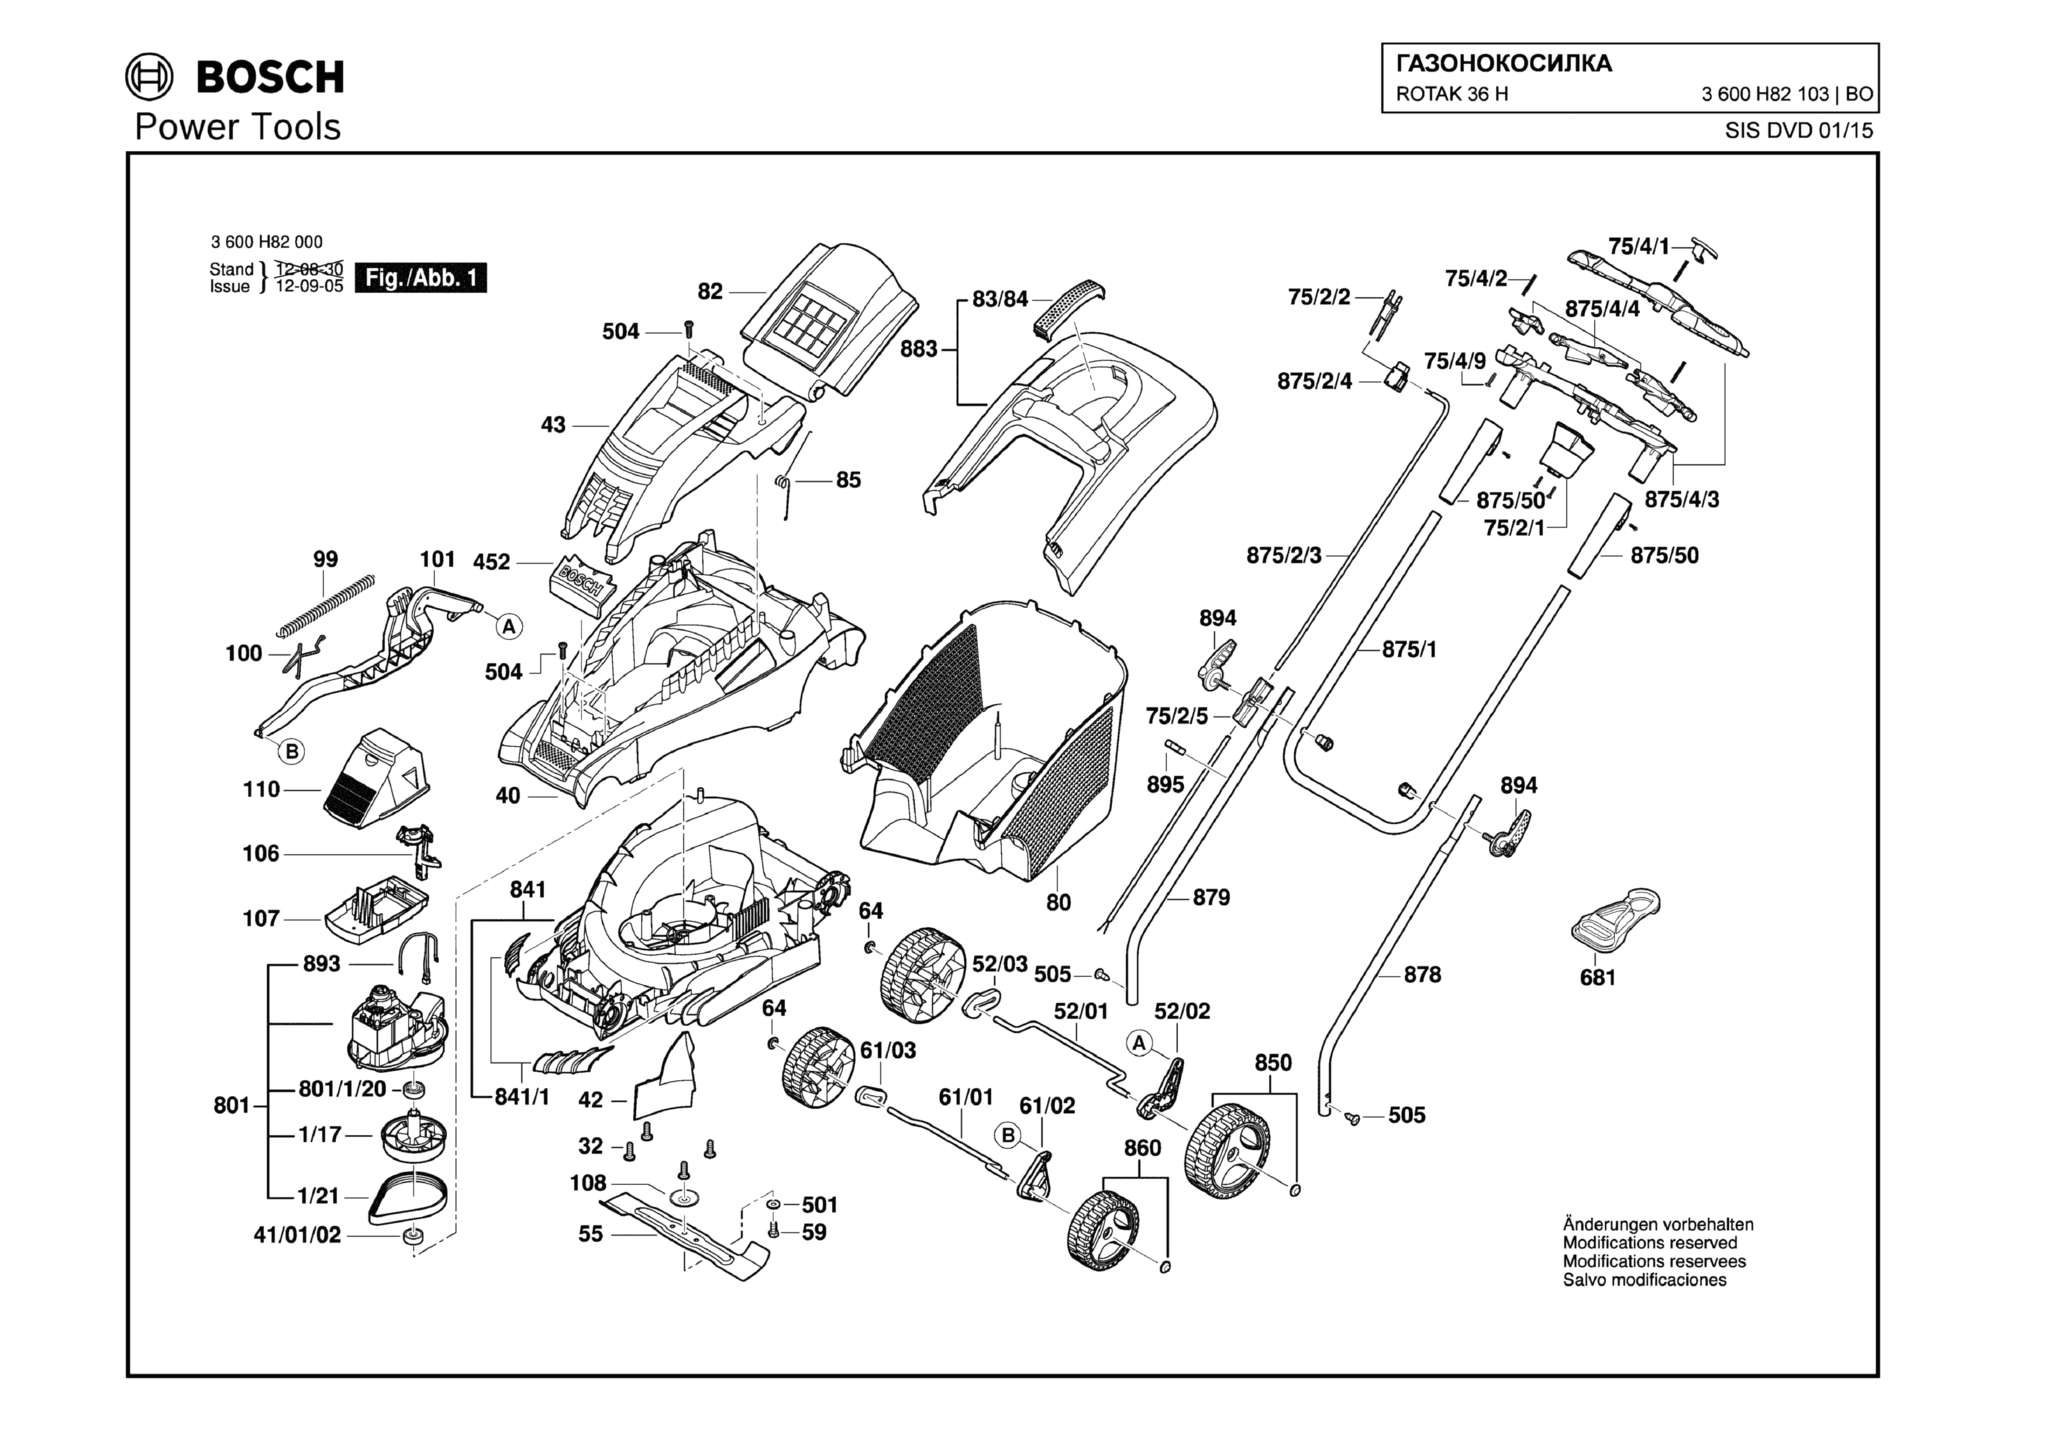 Запчасти, схема и деталировка Bosch ROTAK 36 H (ТИП 3600H82103)